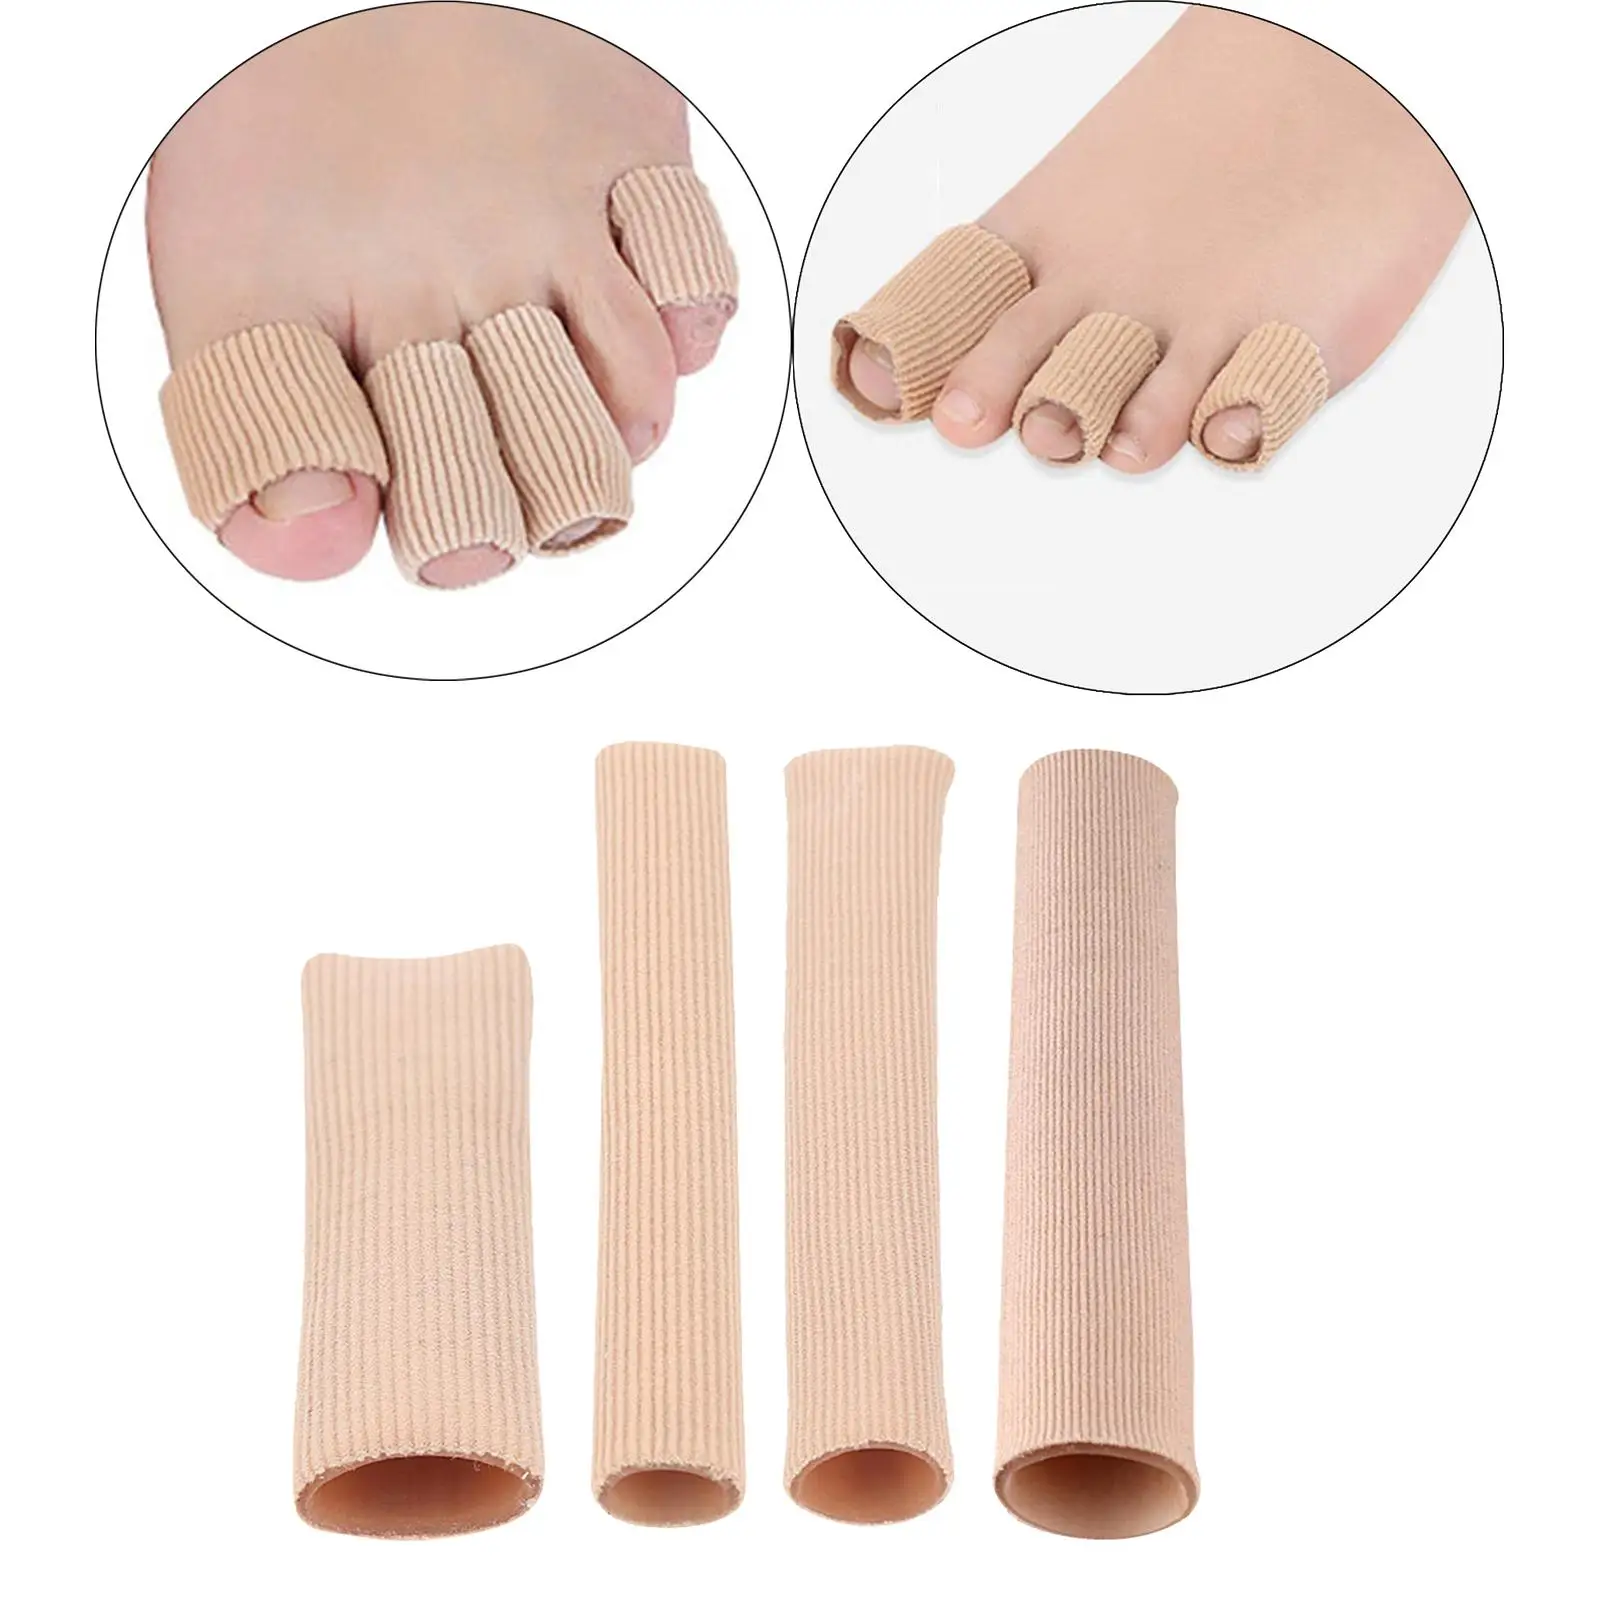 5 Pieces Practical Finger Toe Tube Protector Sleeve Men Women Corns Callus